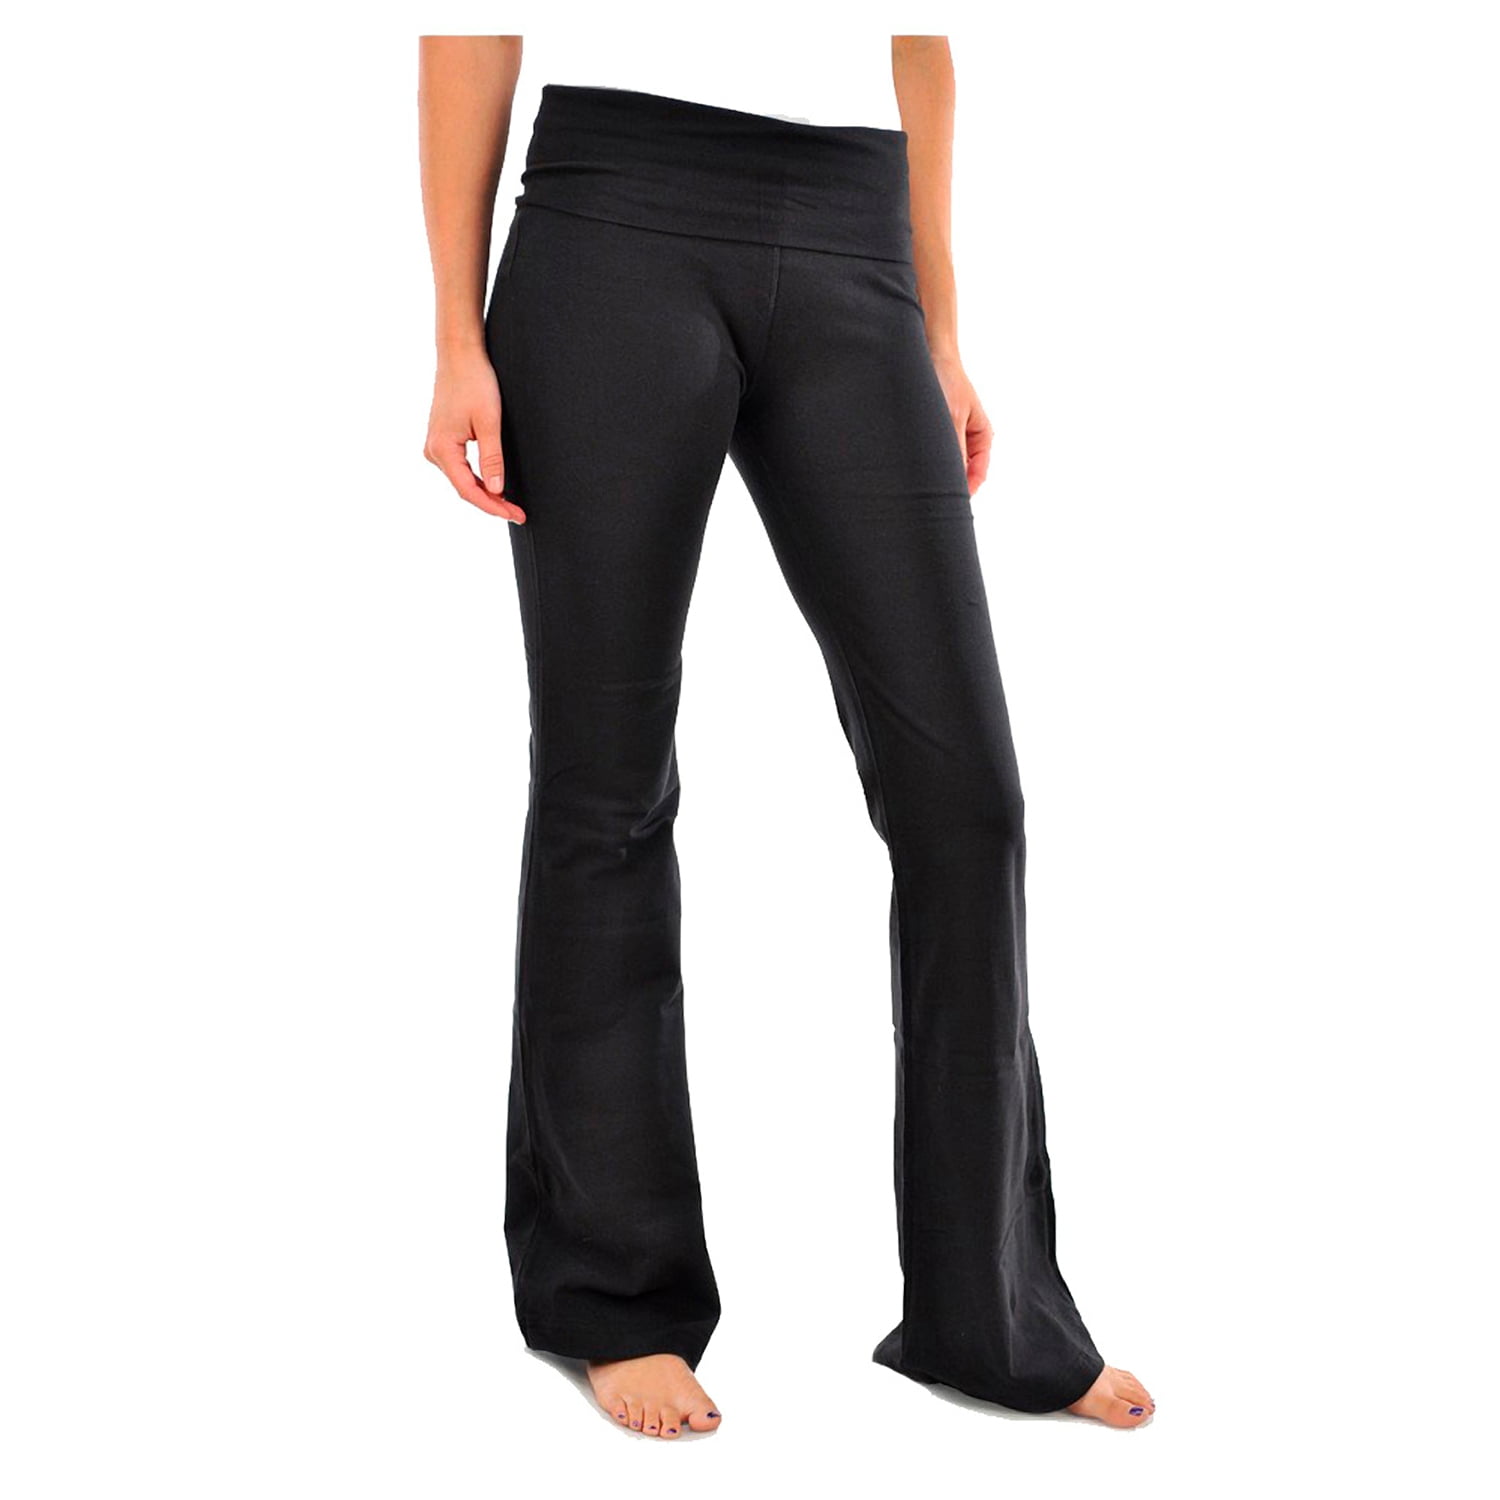 Ladies Yoga Pants -YP1000 - Walmart.com